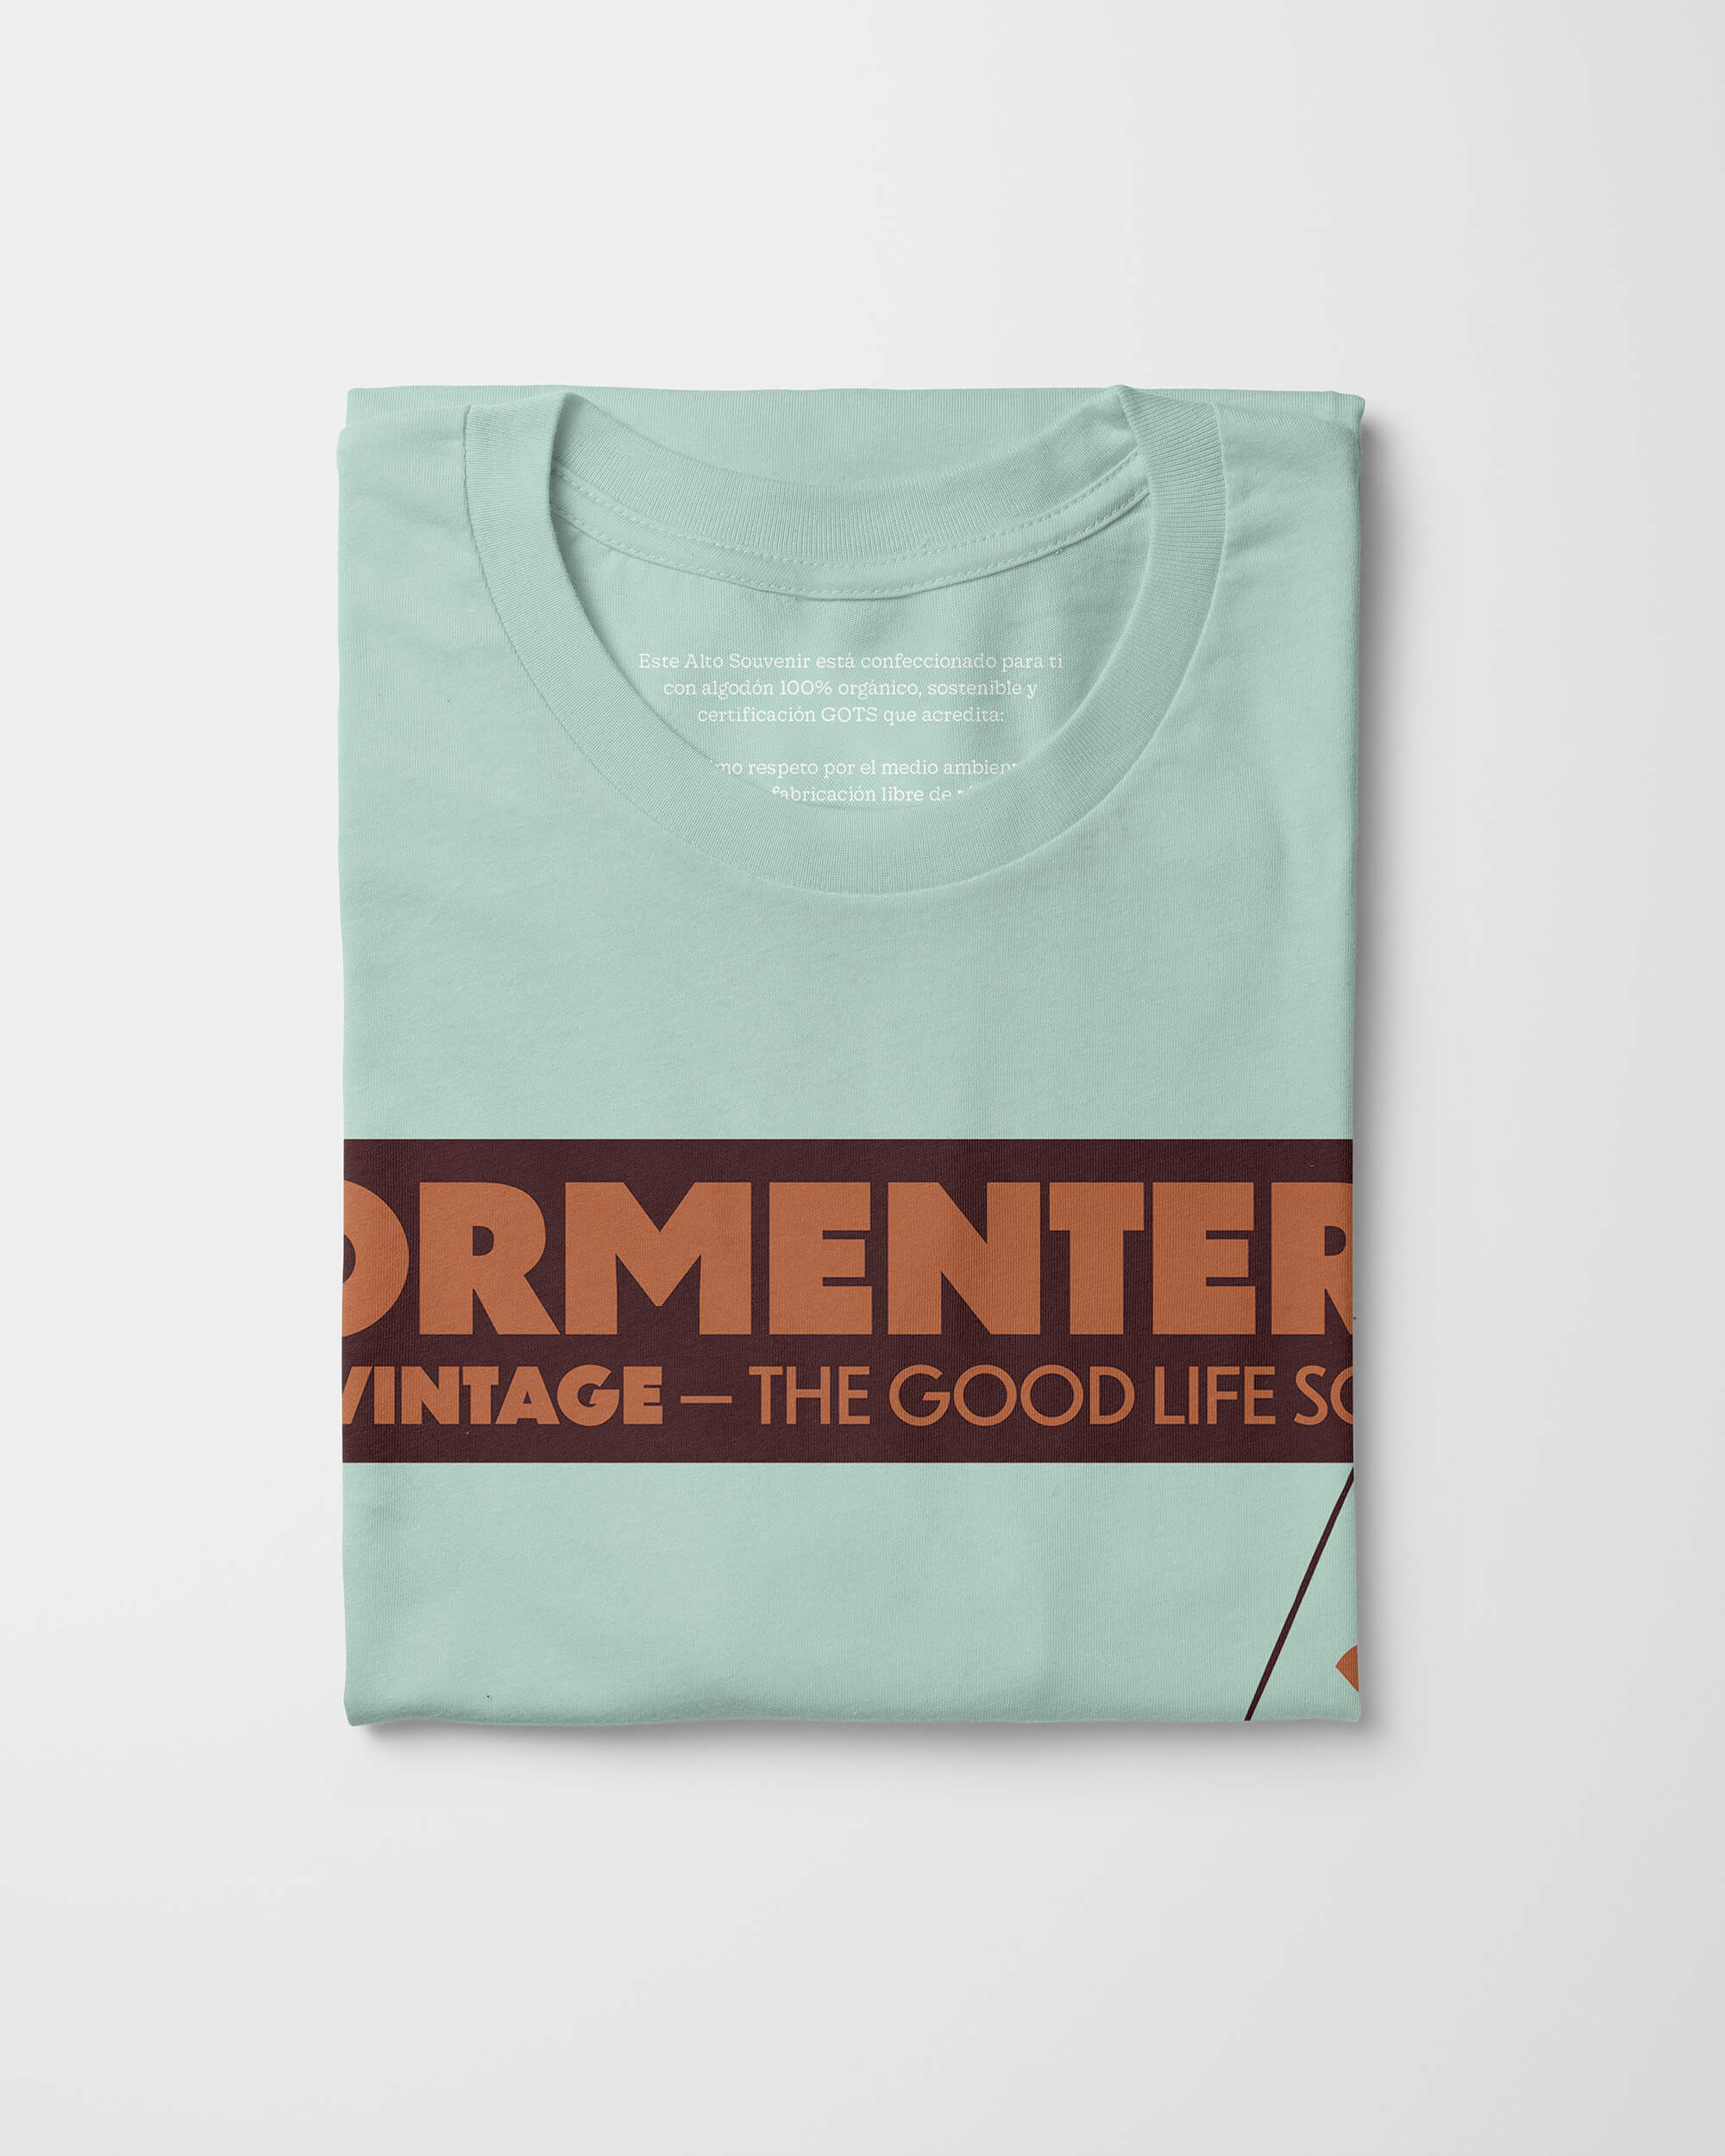 Camiseta Formentera Mint BonVintage